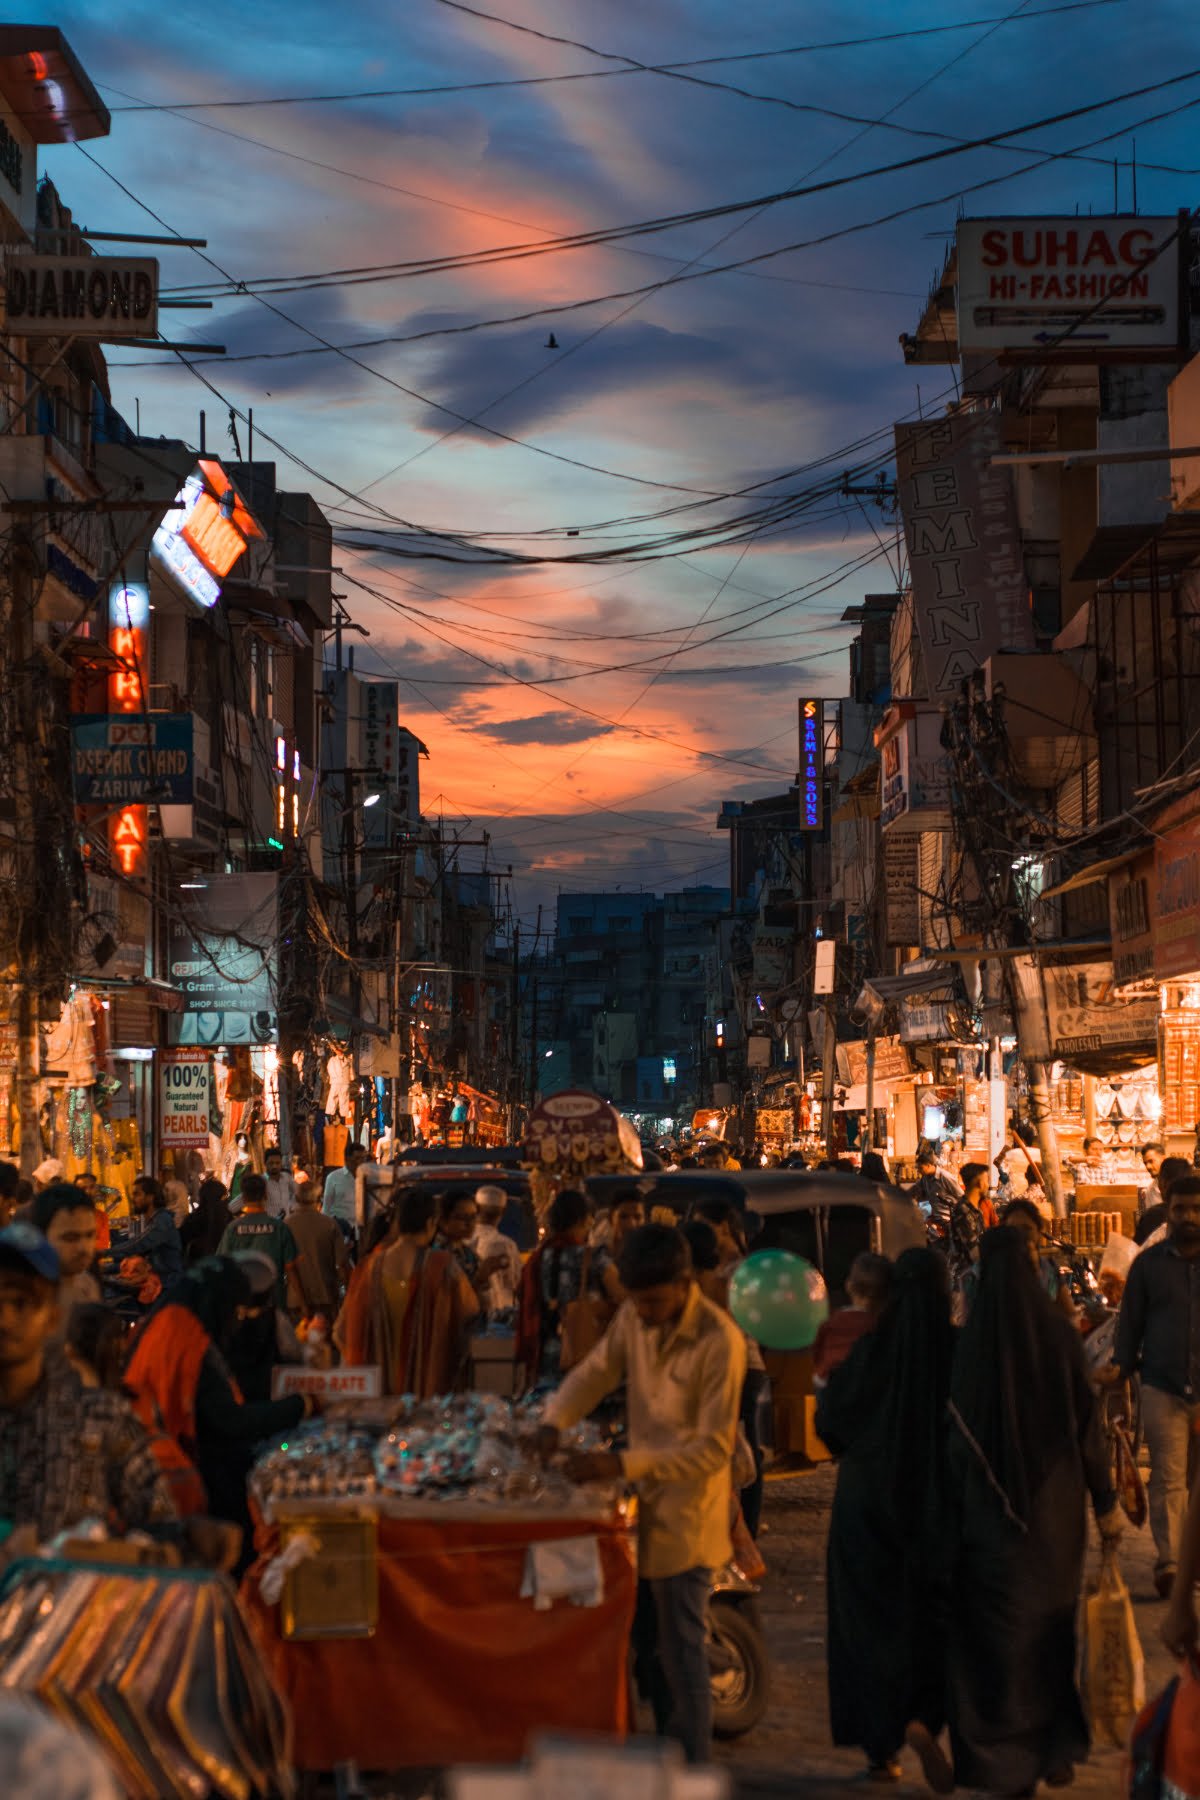 Hyderabad, Telangana, India